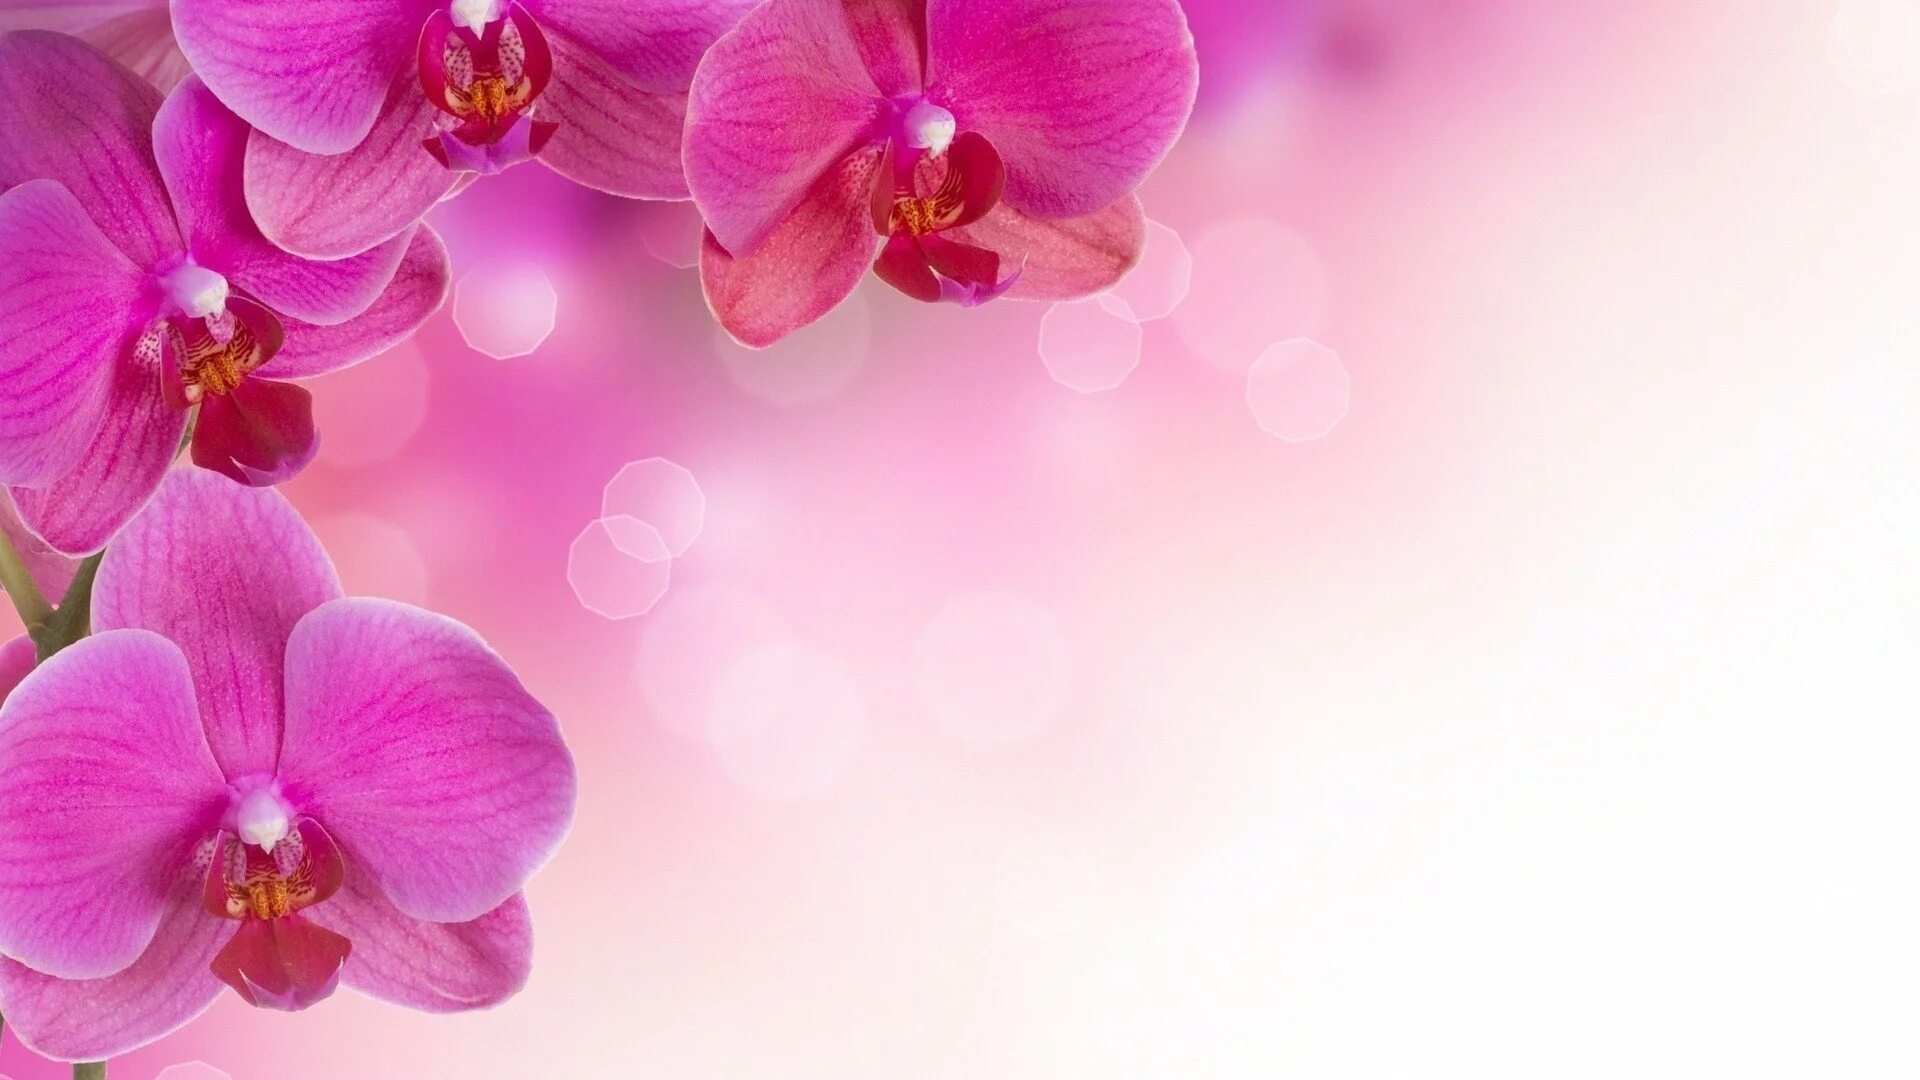 Красивое нежное имя. Фон с цветами. Цветок орхидеи. Обои на рабочий стол орхидеи. Орхидея на розовом фоне.